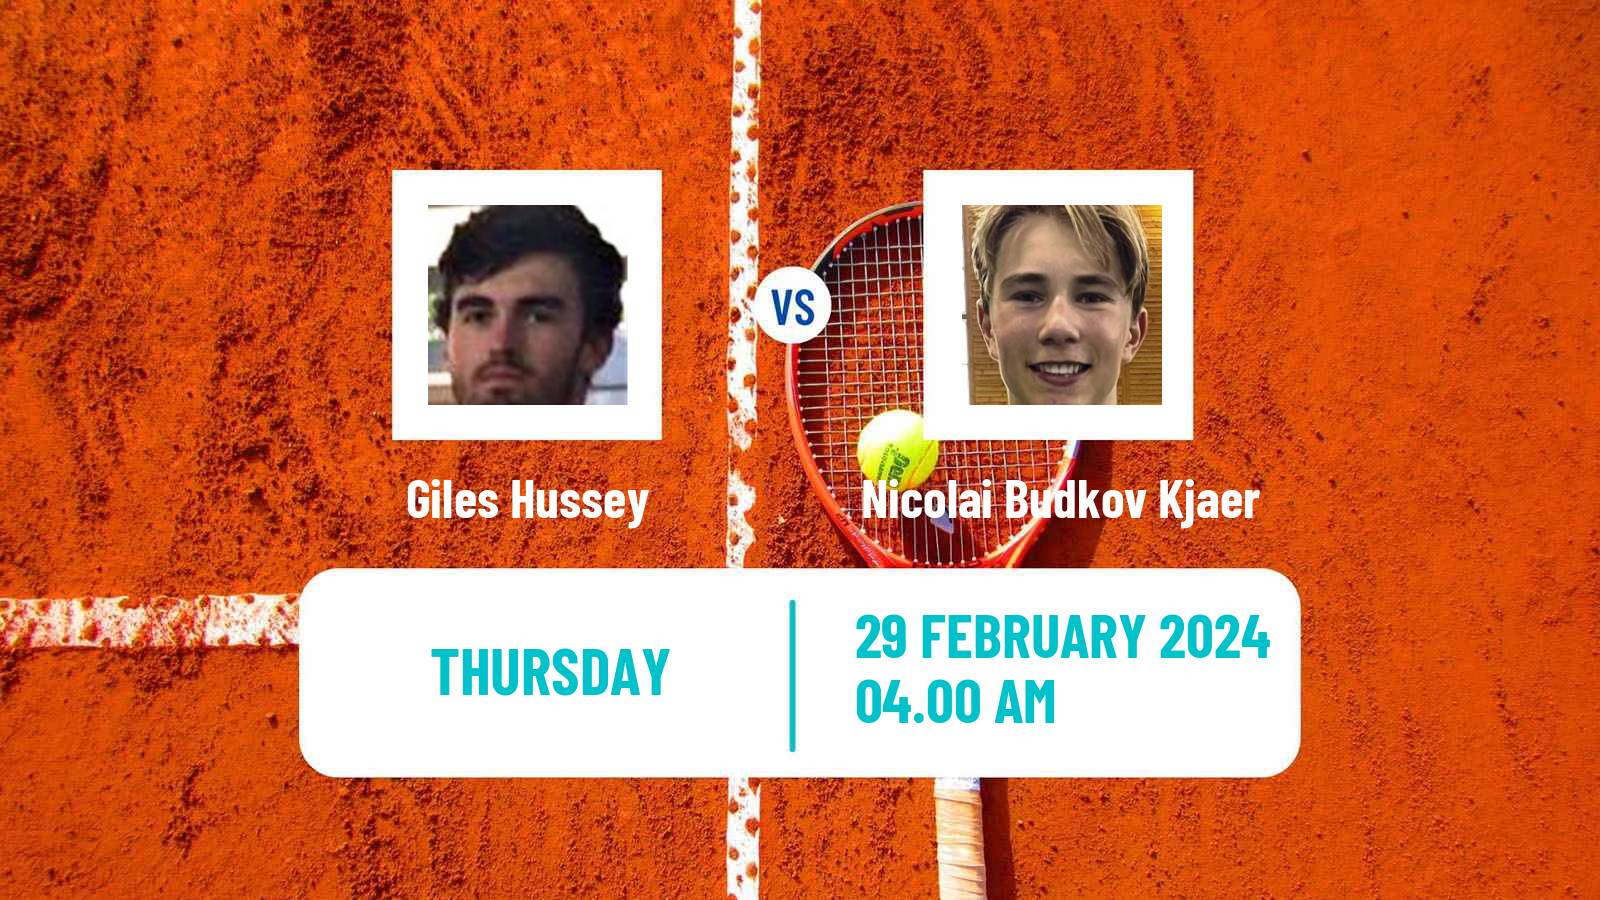 Tennis ITF M15 Villena 2 Men Giles Hussey - Nicolai Budkov Kjaer